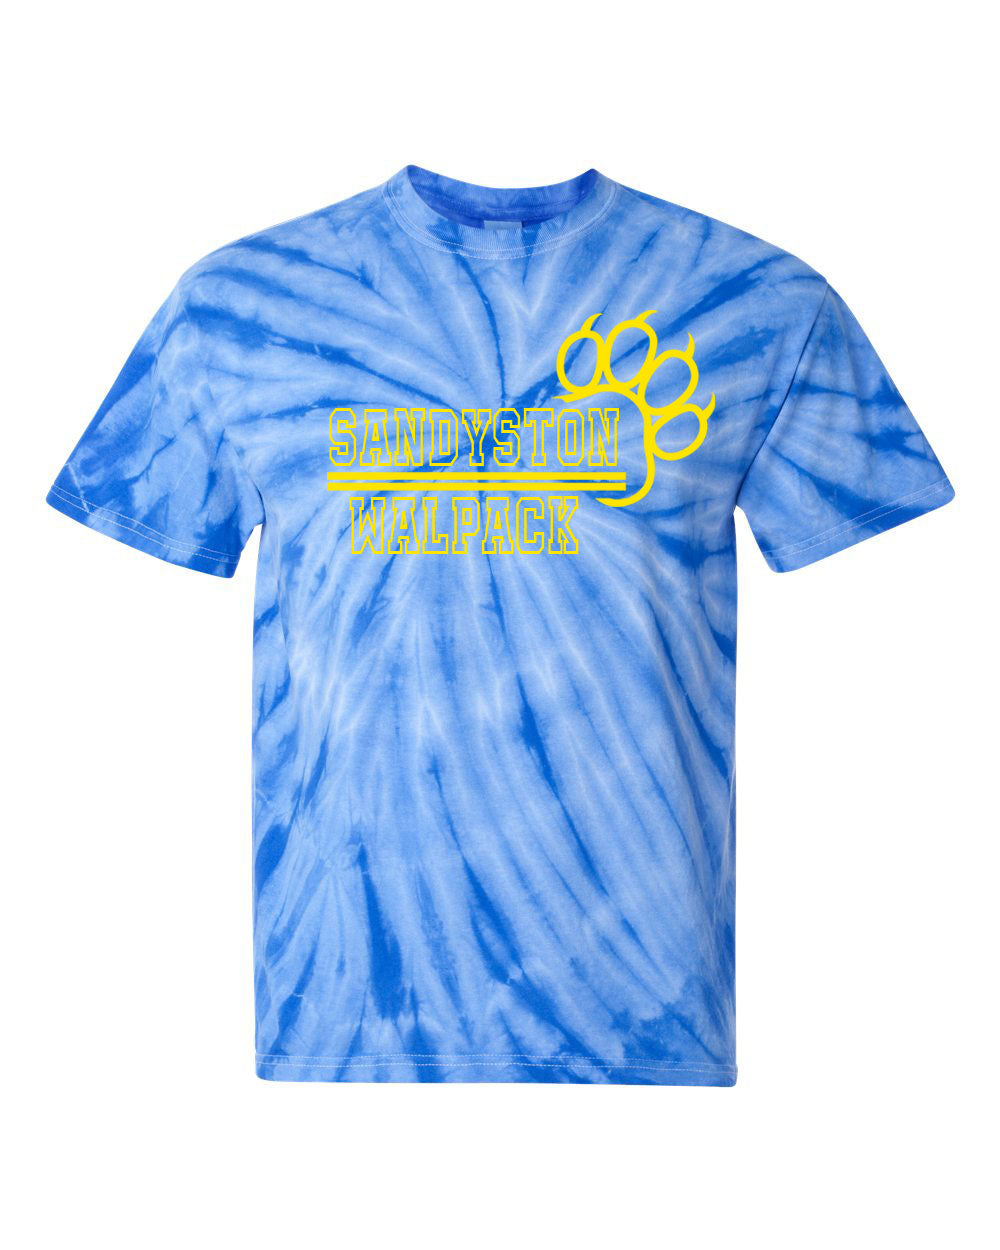 Sandyston Walpack Design 16 Tie Dye t-shirt